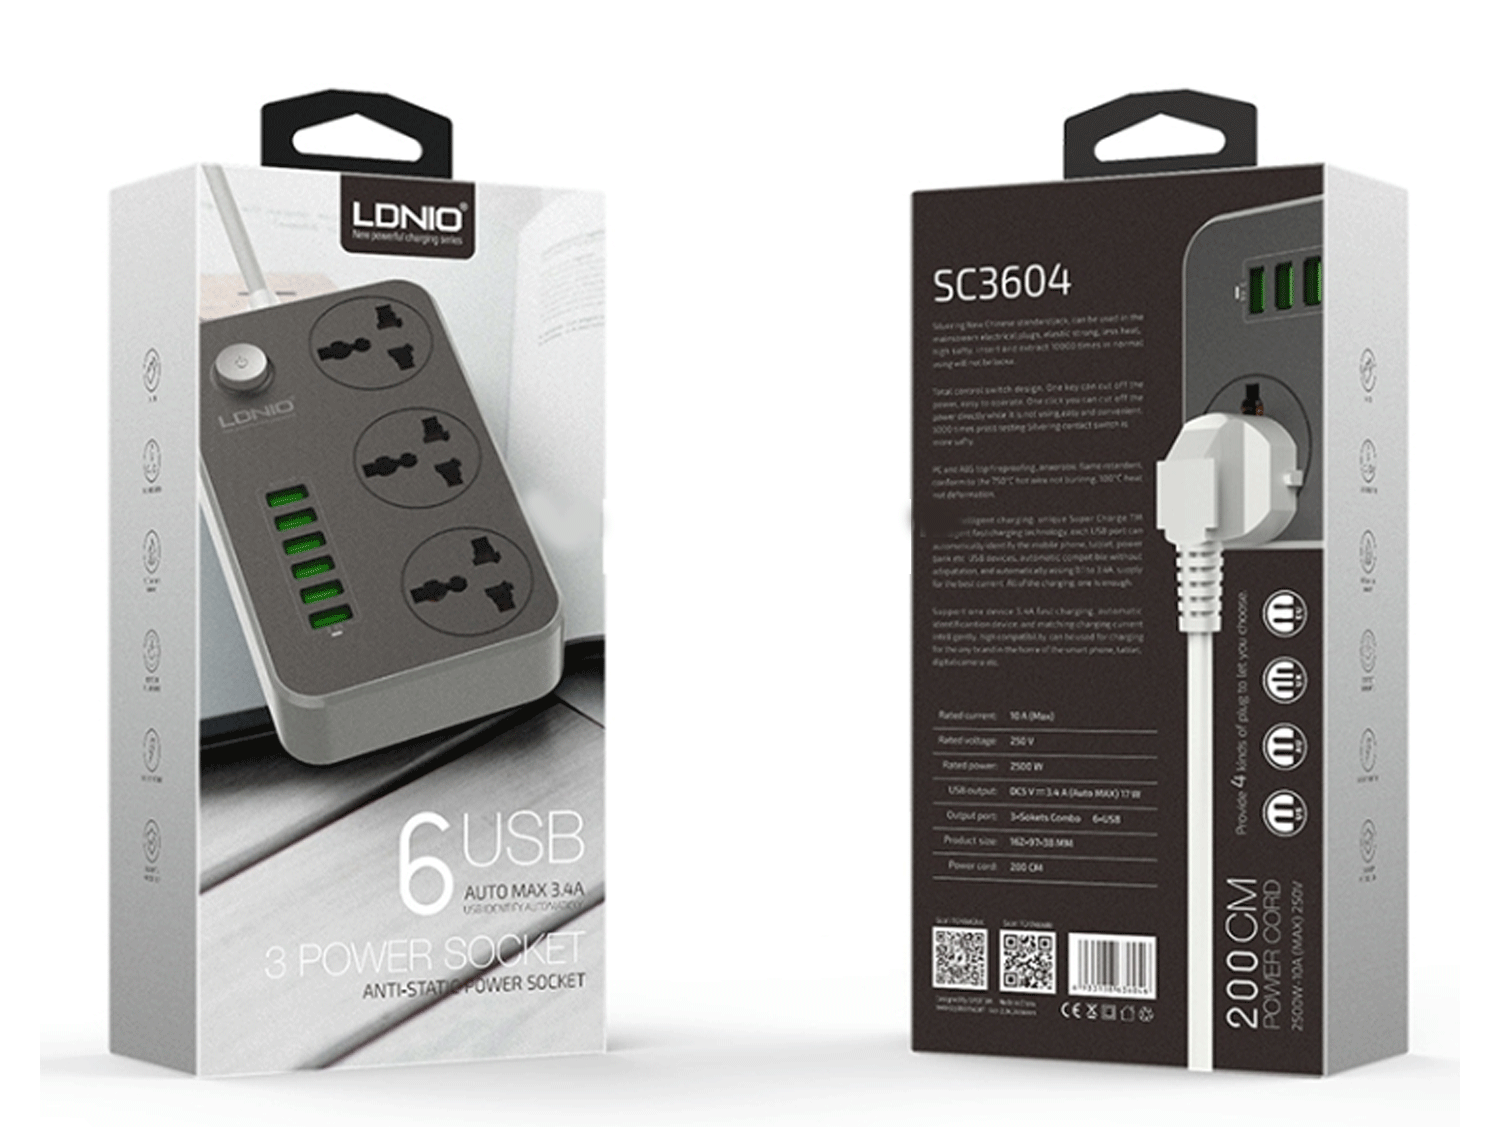 LDNIO SC3604 3 Power Socket + 6 USB Extension Power Cord